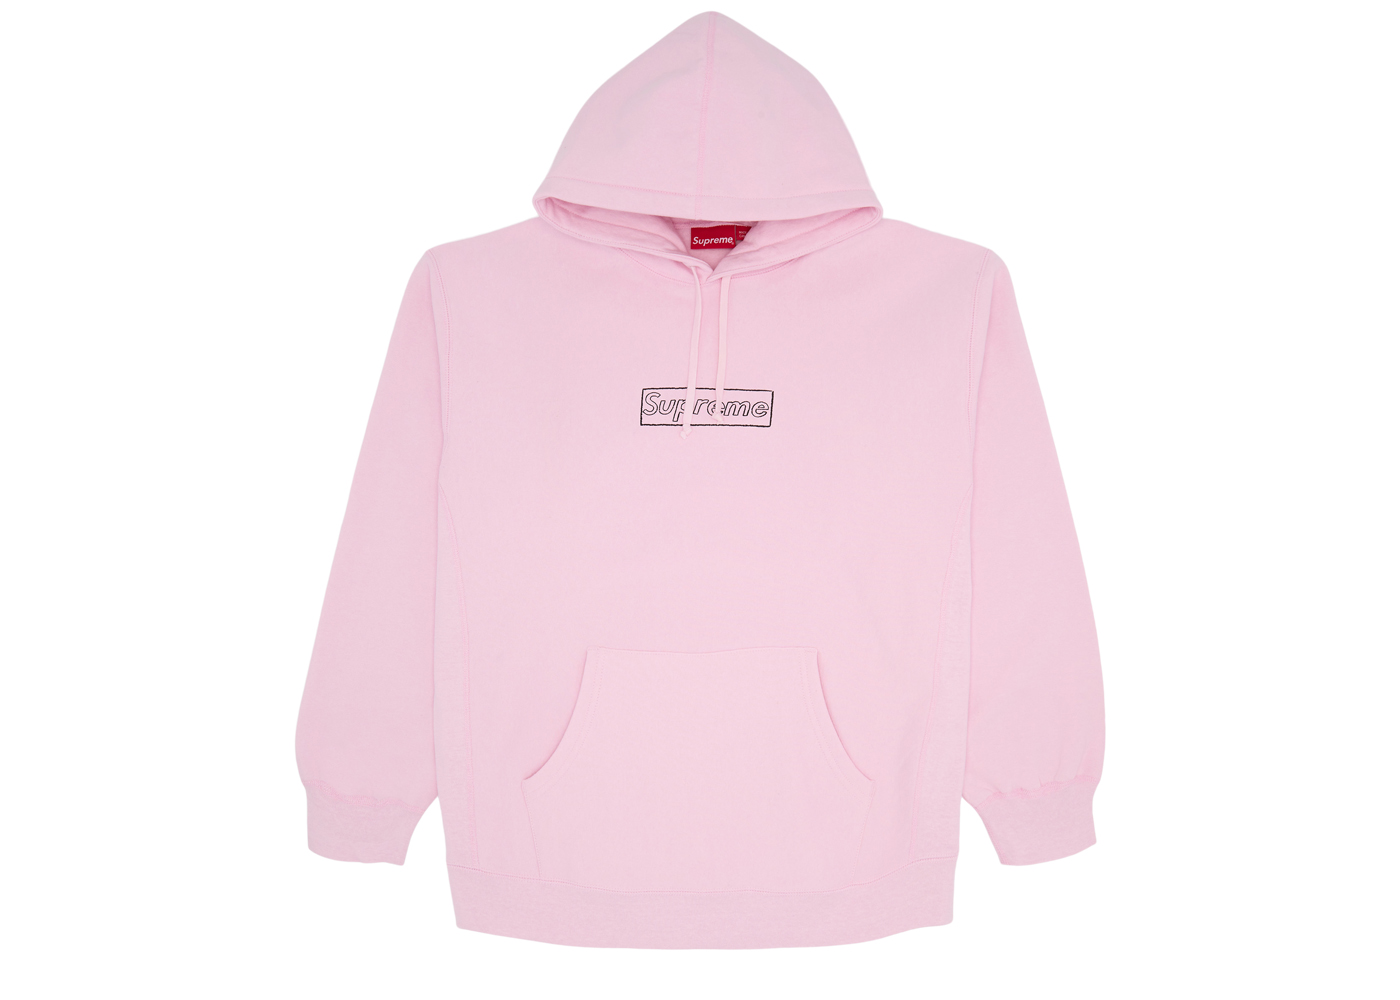 Supreme KAWS Chalk Logo Hooded Sweatshirt Light Pink Men's - SS21 - US